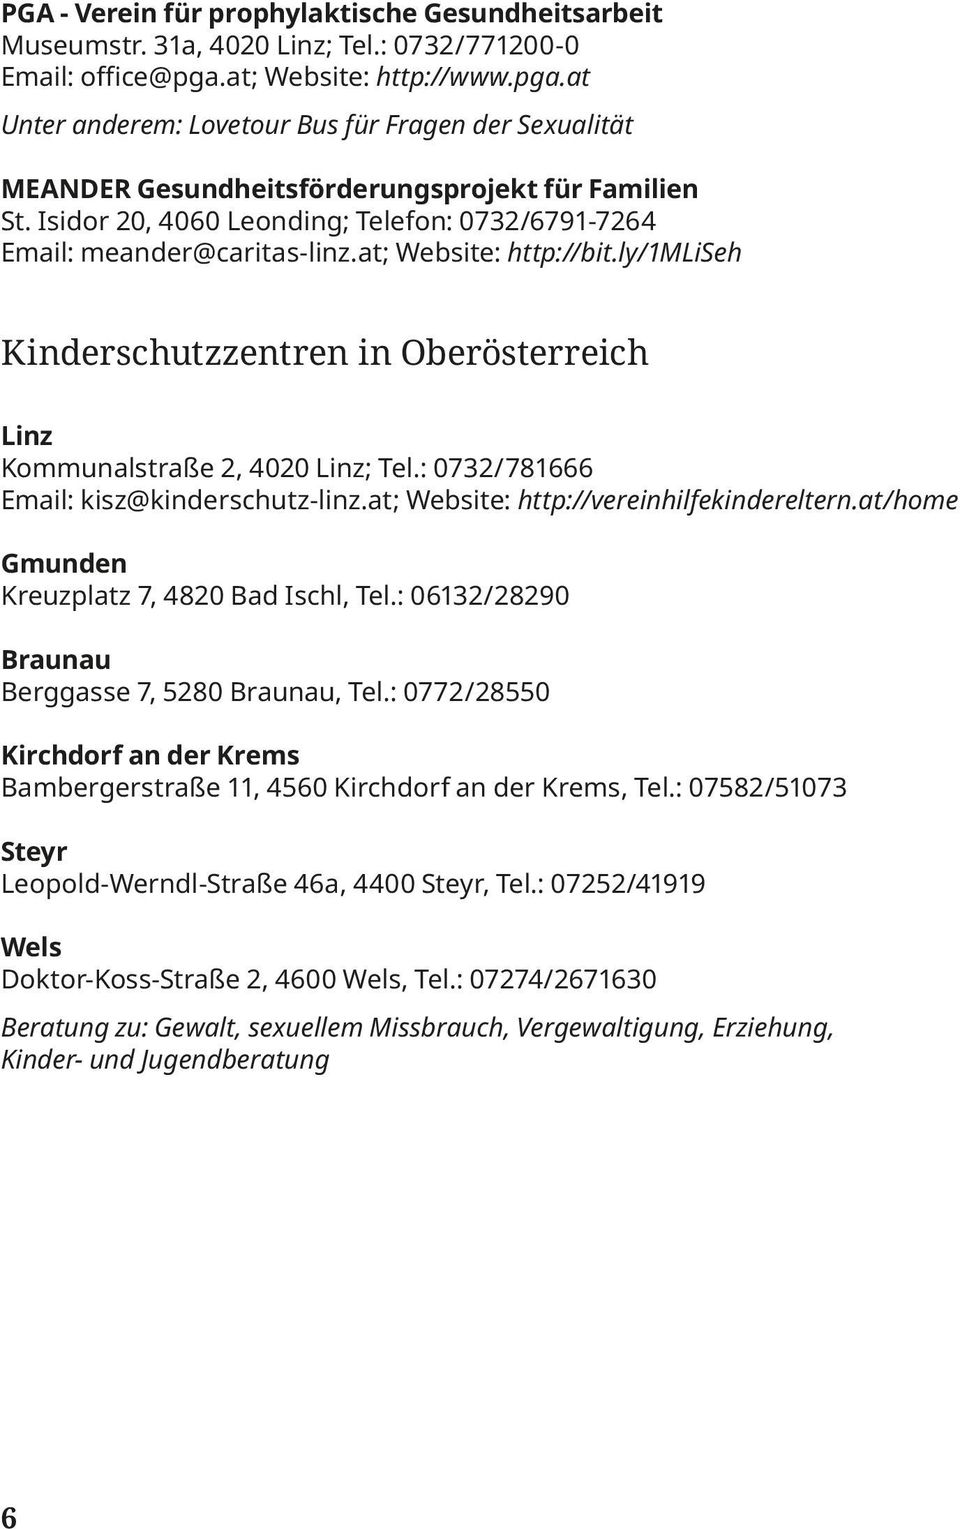 Isidor 20, 4060 Leonding; Telefon: 0732/6791-7264 Email: meander@caritas-linz.at; Website: http://bit.ly/1mliseh Kinderschutzzentren in Oberösterreich Linz Kommunalstraße 2, 4020 Linz; Tel.